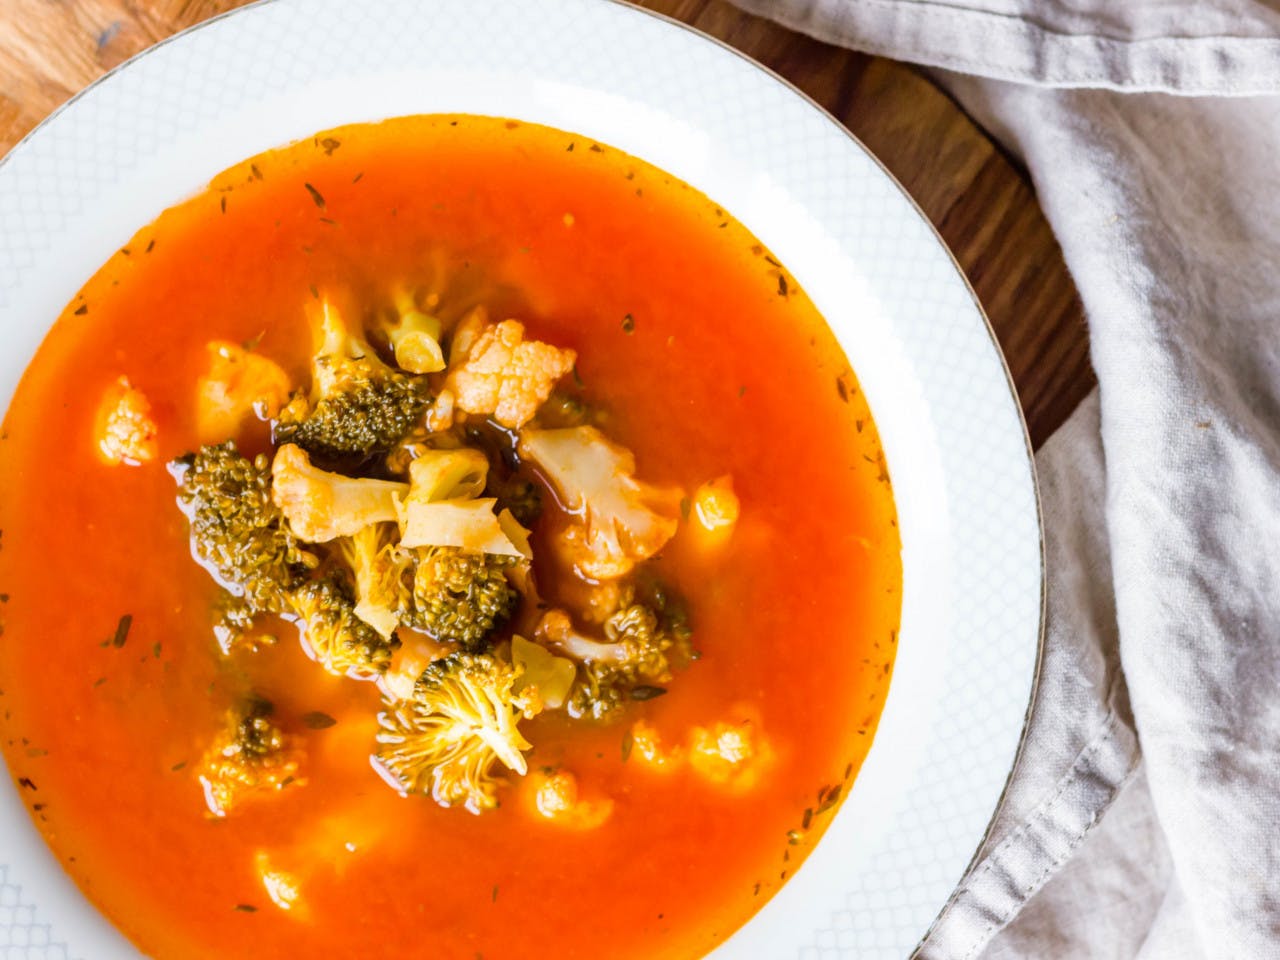 Cauliflower broccoli soup with chicken